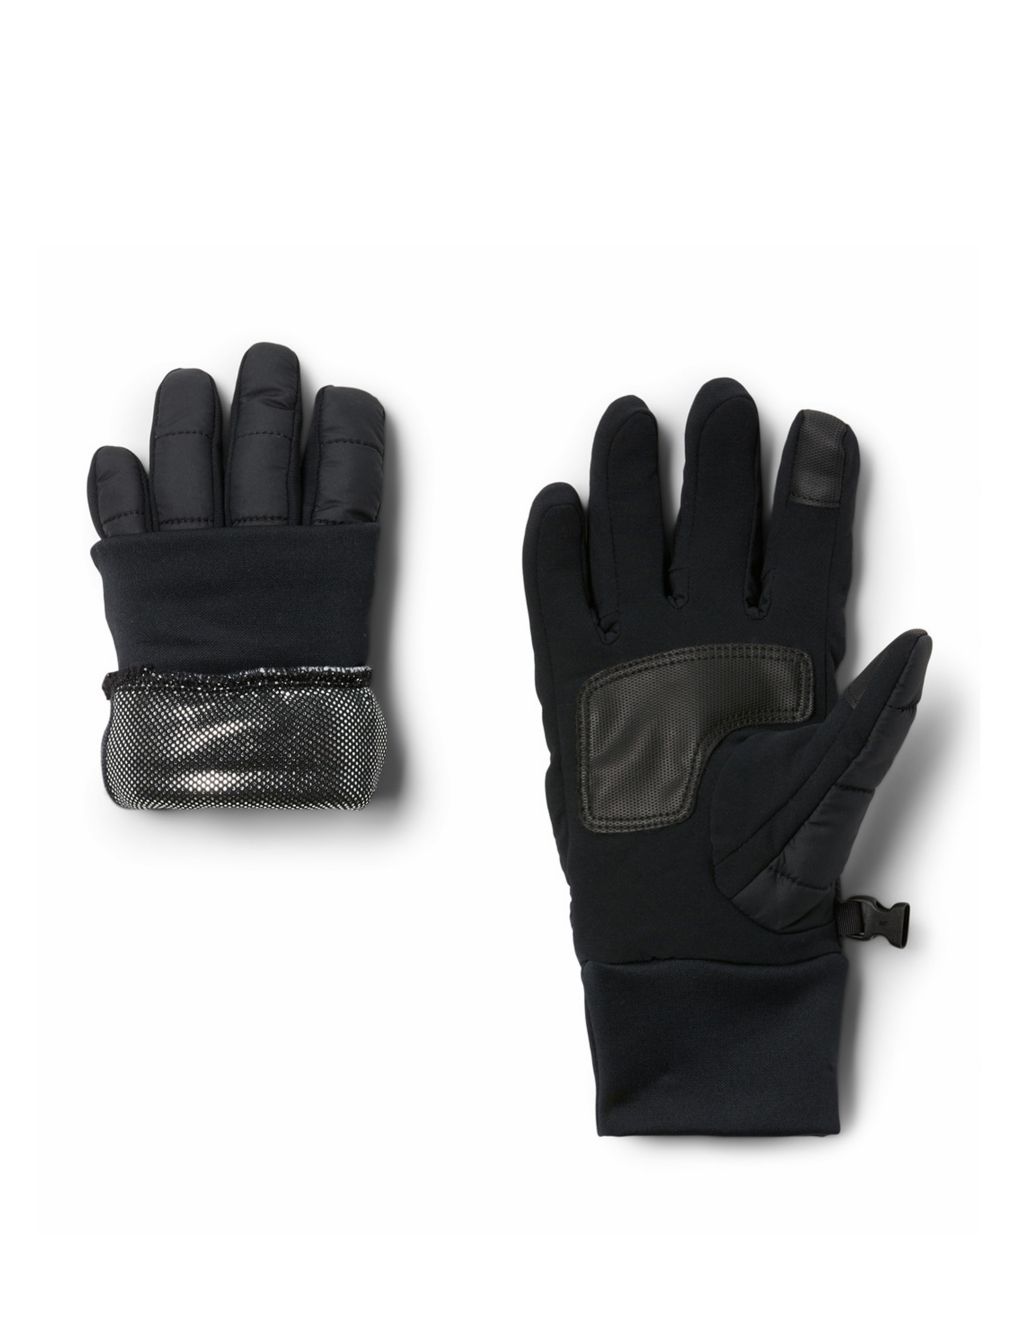 Powder Lite Touchscreen Gloves image 2